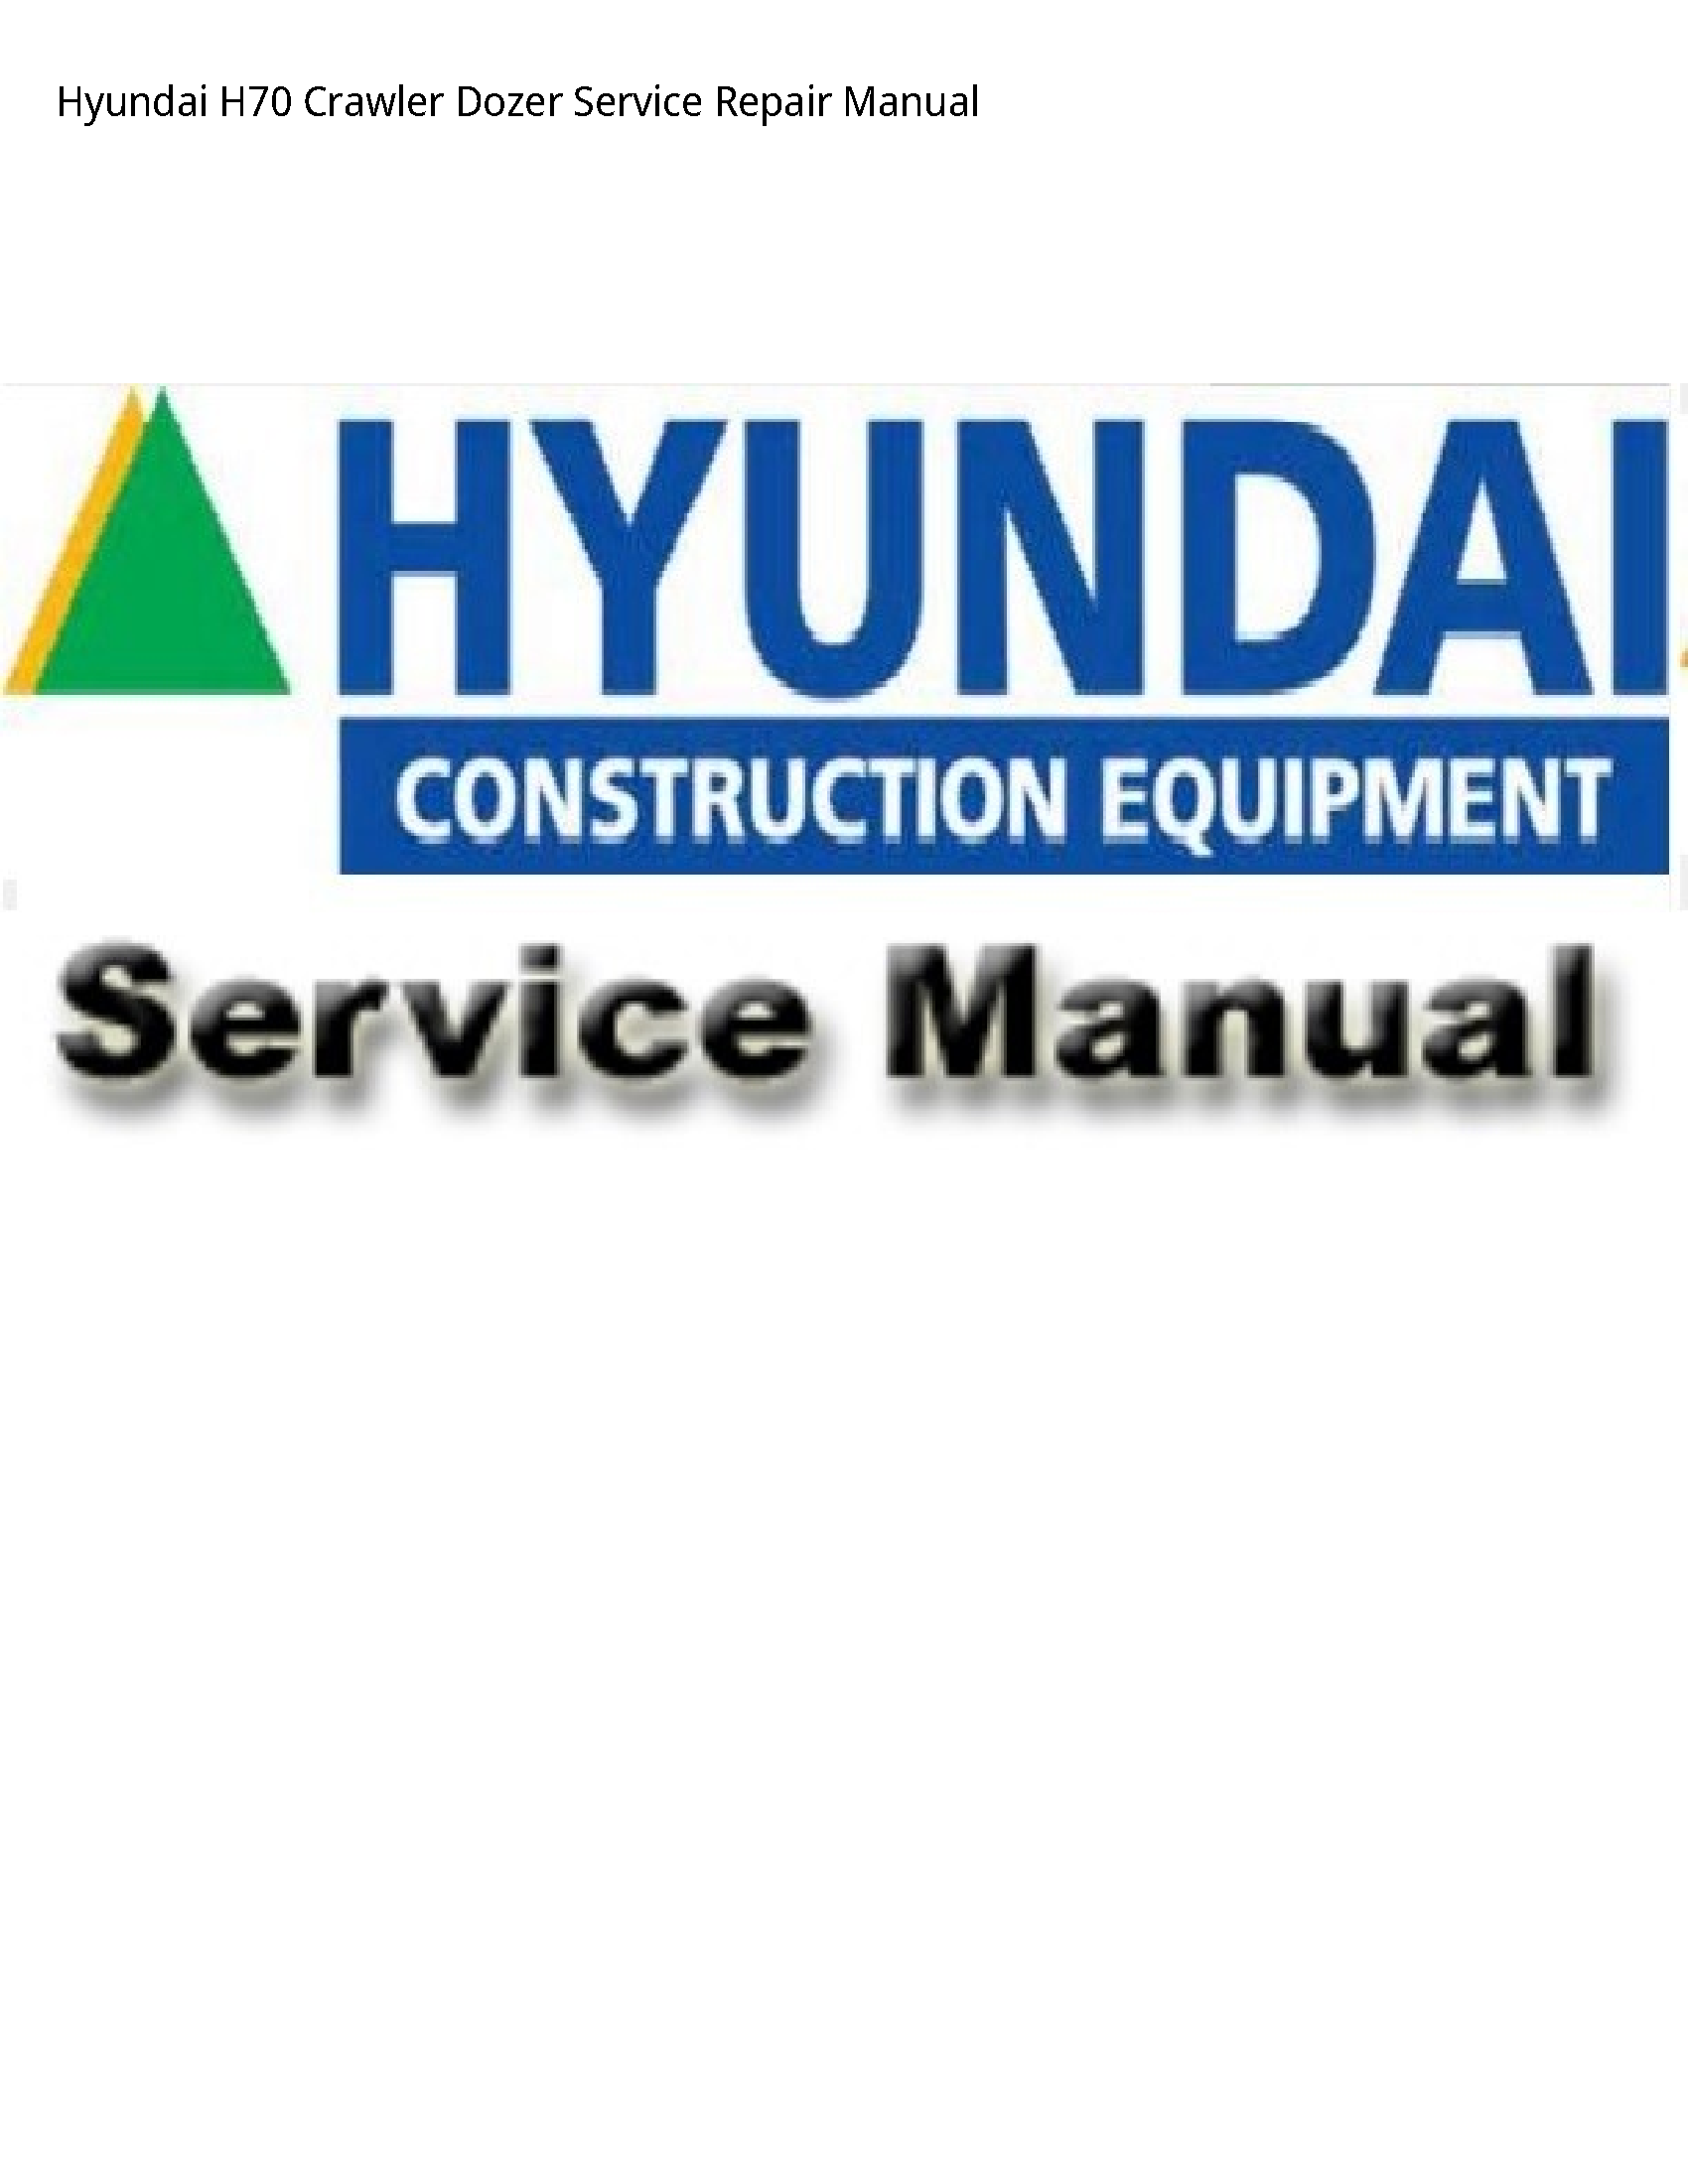 Hyundai H70 Crawler Dozer manual